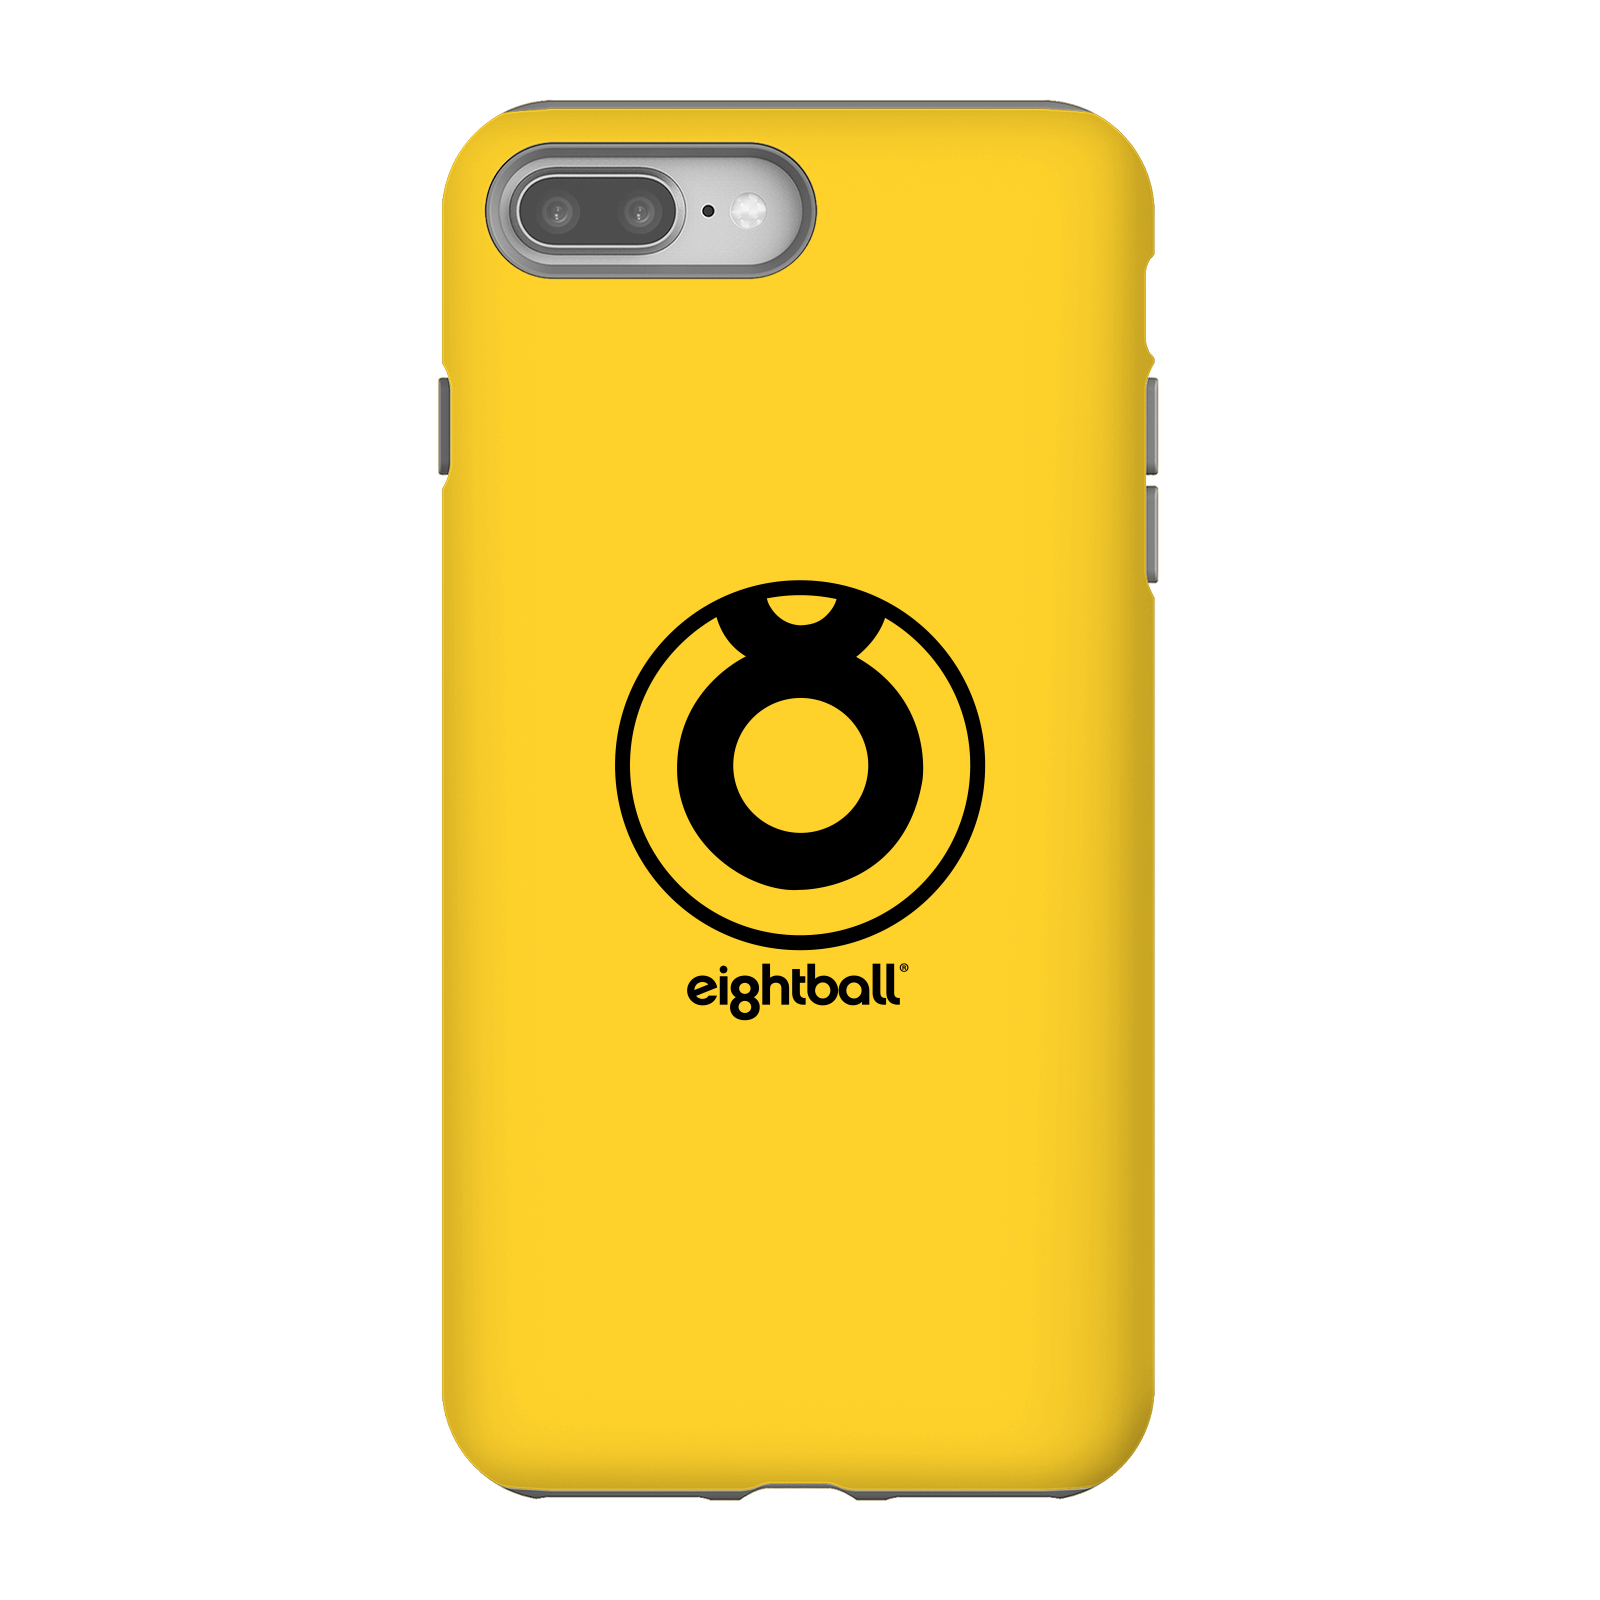 Funda Móvil Ei8htball Large Circle Logo para iPhone y Android - iPhone 8 Plus - Carcasa doble capa - Mate